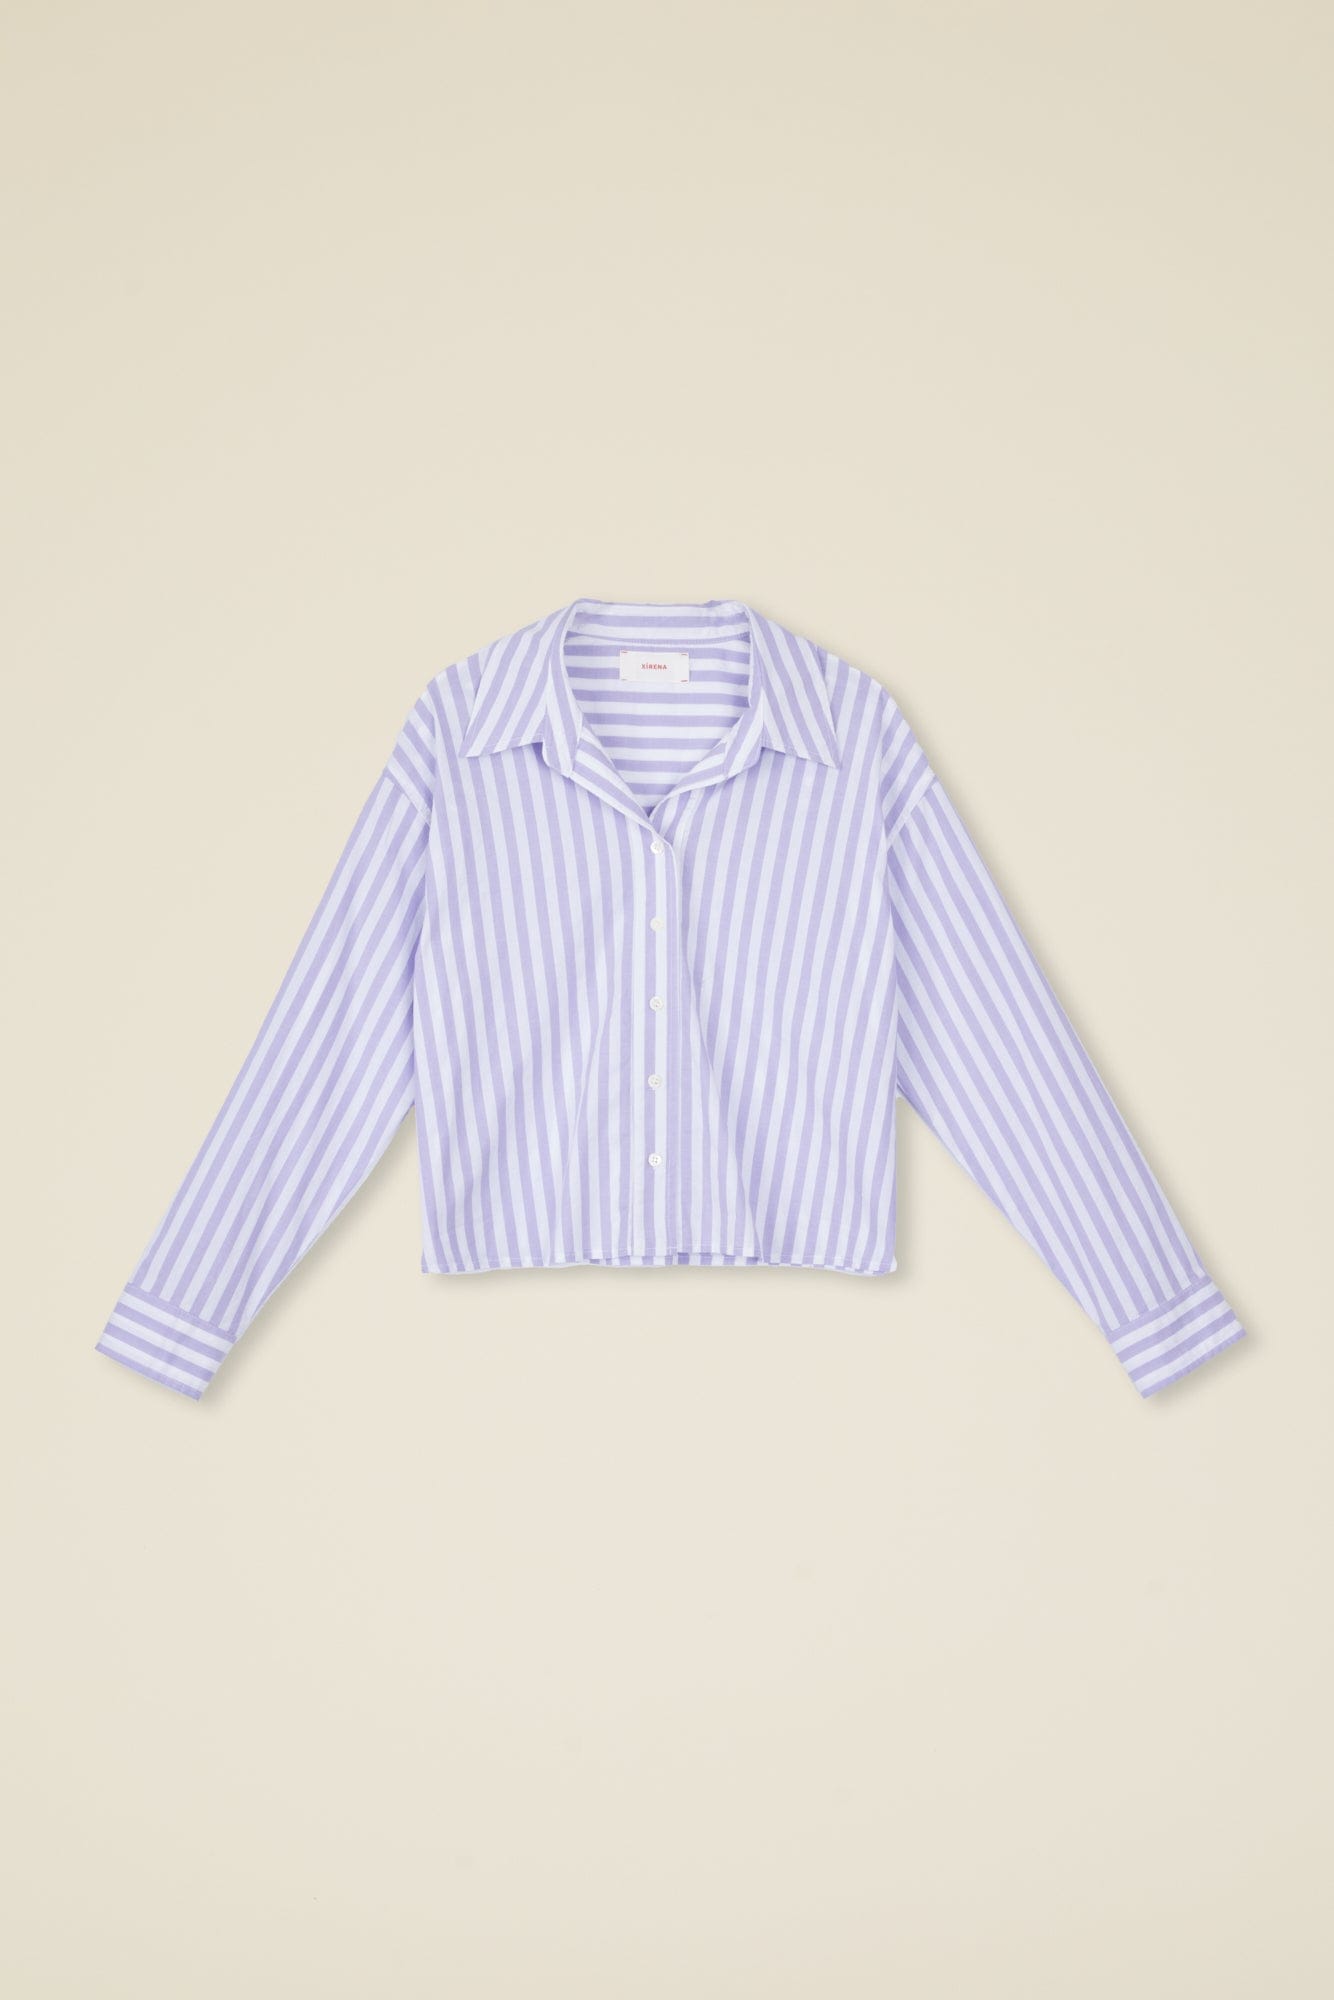 Amethyst Stripe Morgan Shirt